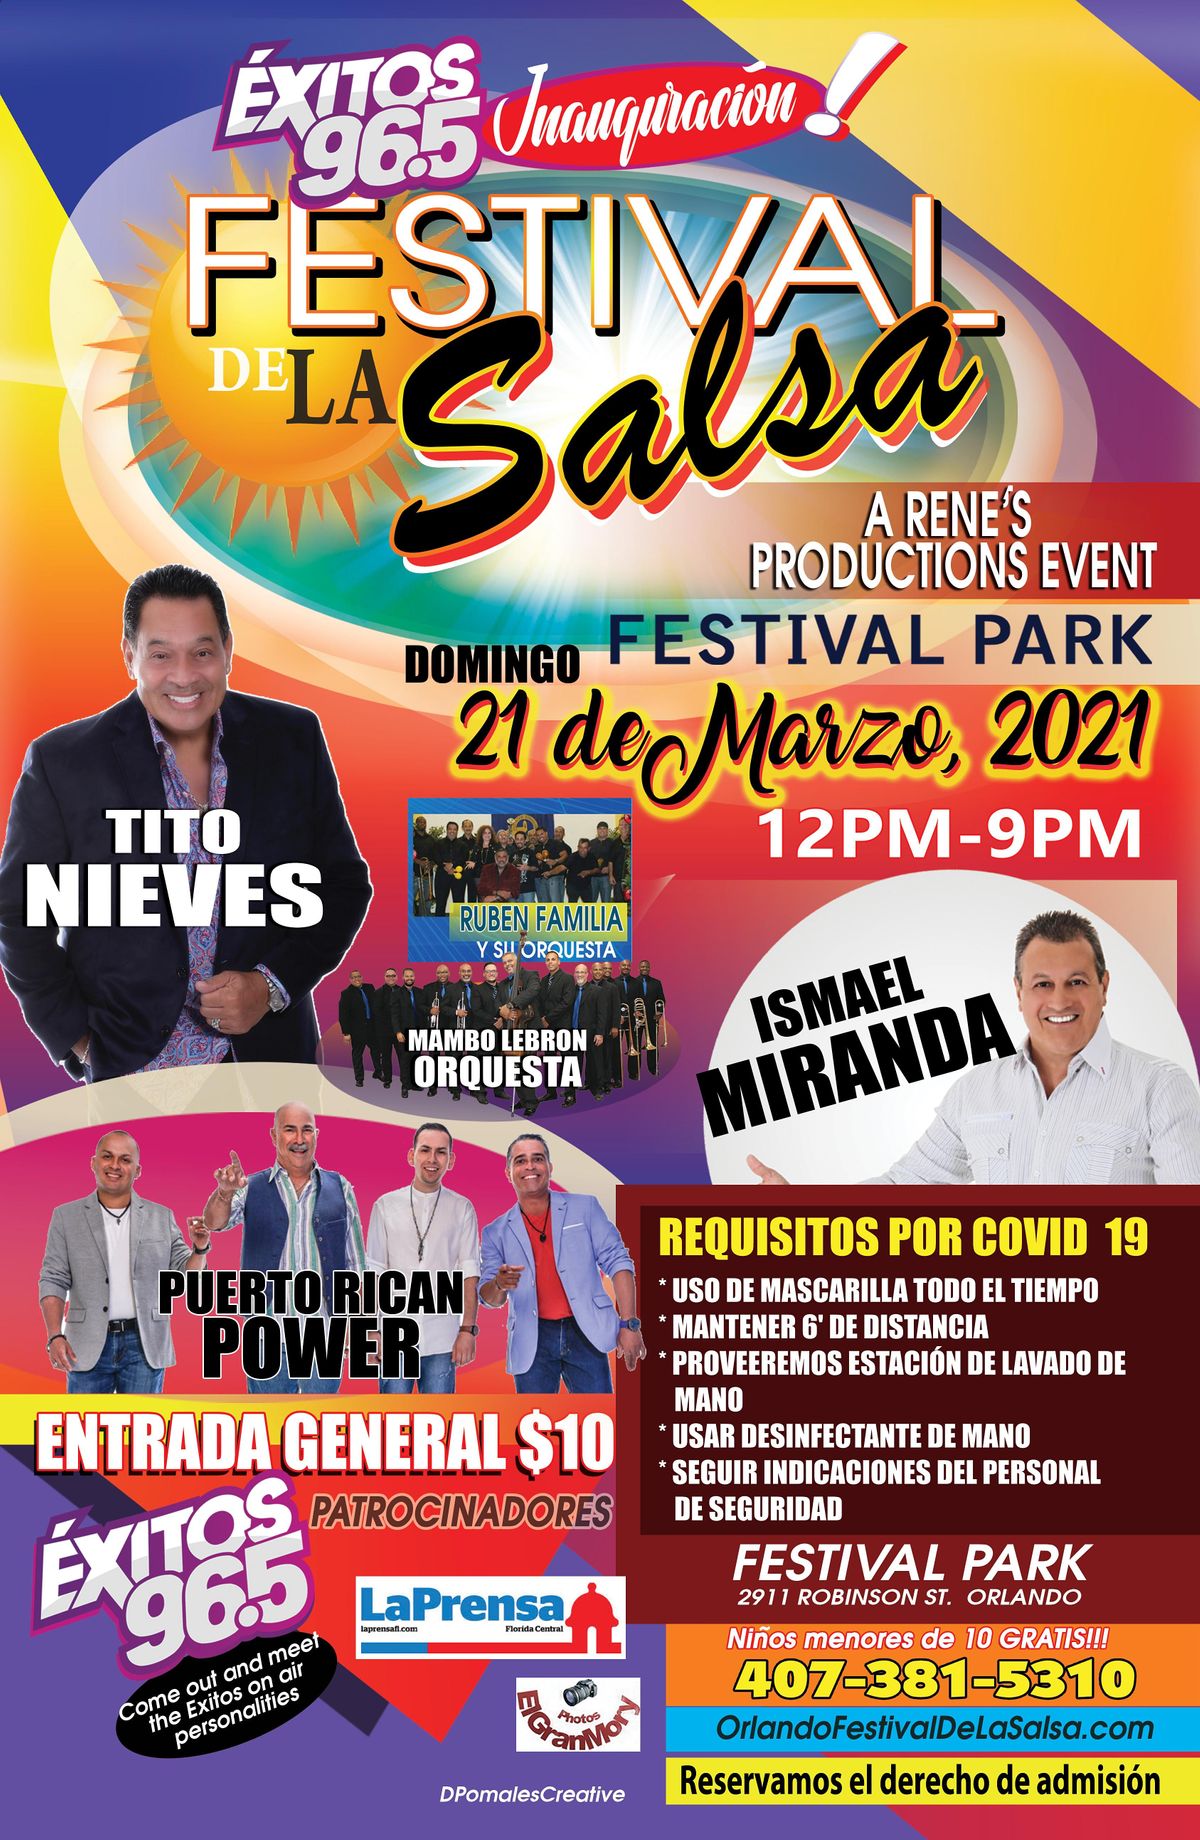 Festival De La Salsa 2021 Tickets AVAILABLE at the event on March 21,  Festival Park, Orlando, 21 March 2021